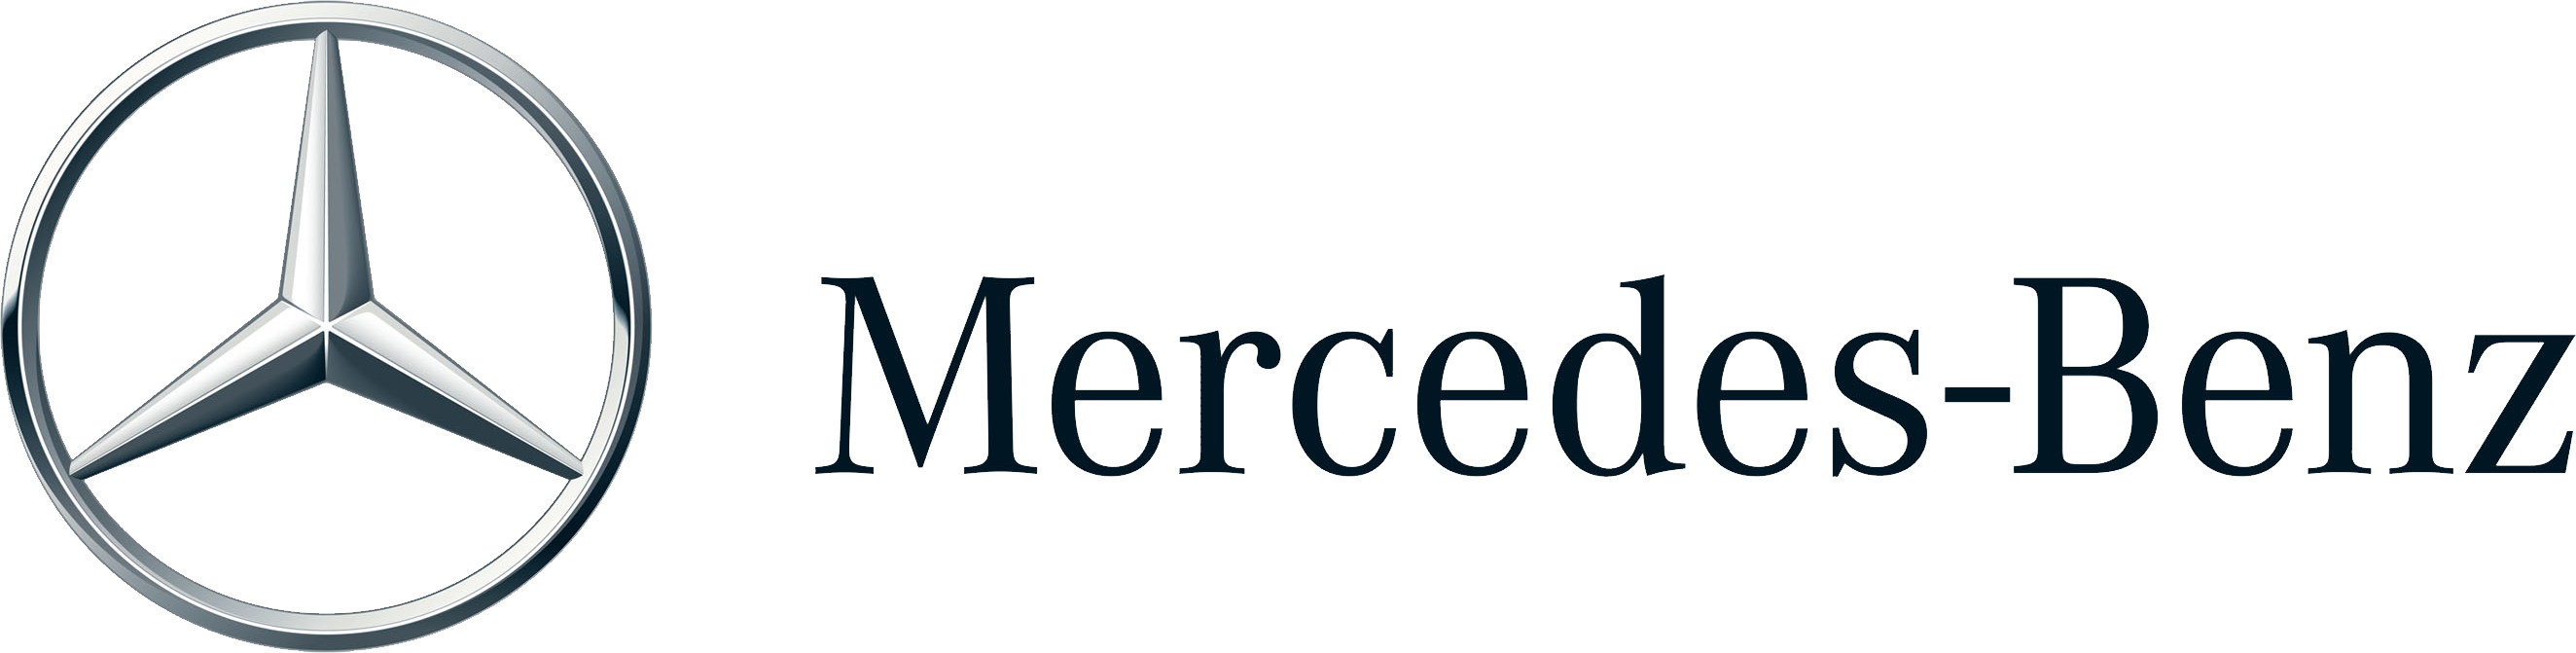 Immagine Trasparente logo Mercedes-Benz